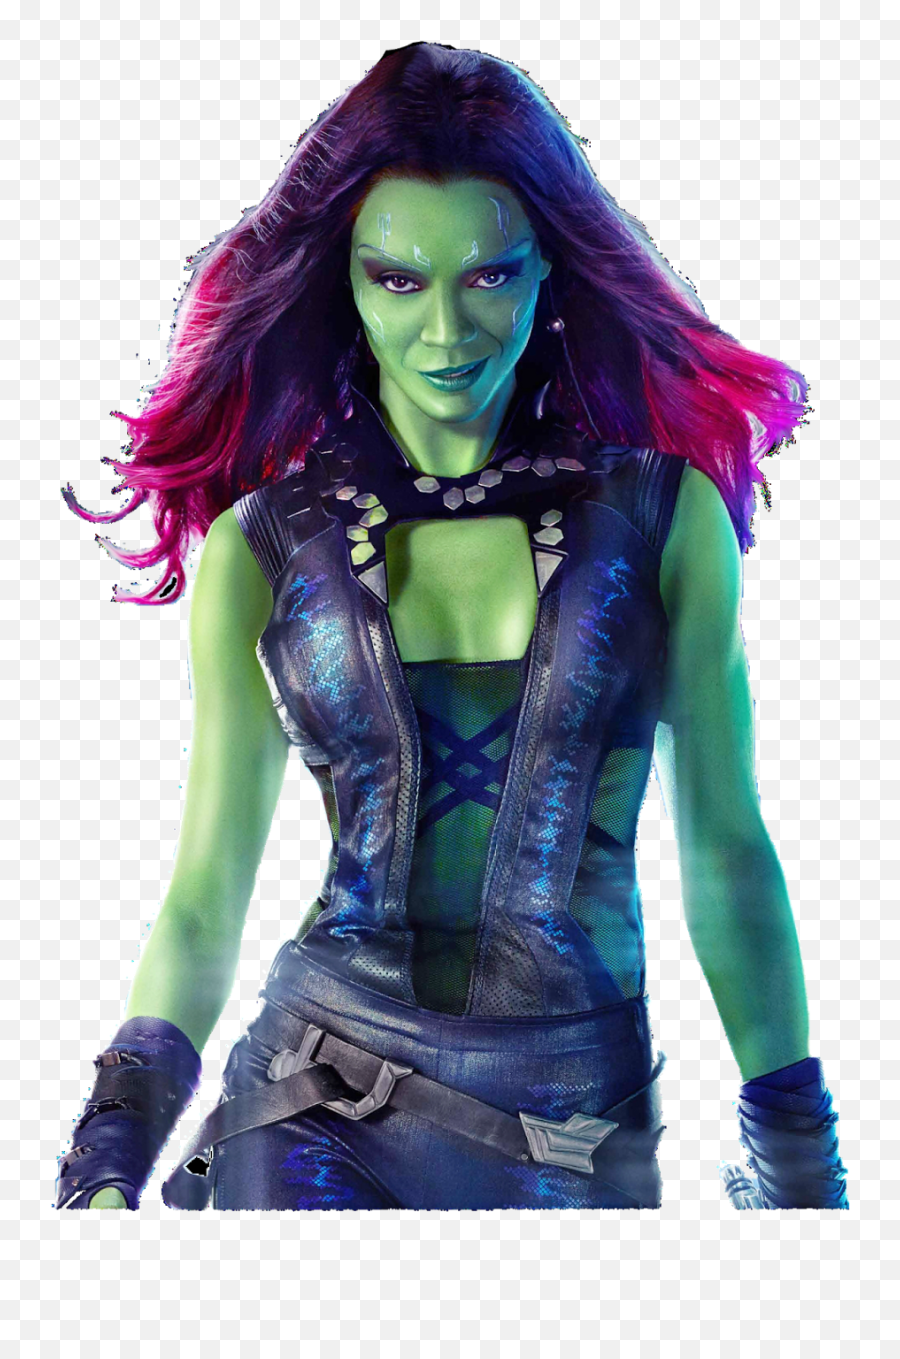 Download Free Png Gamora - Gamora Guardians Of The Galaxy,Gamora Png